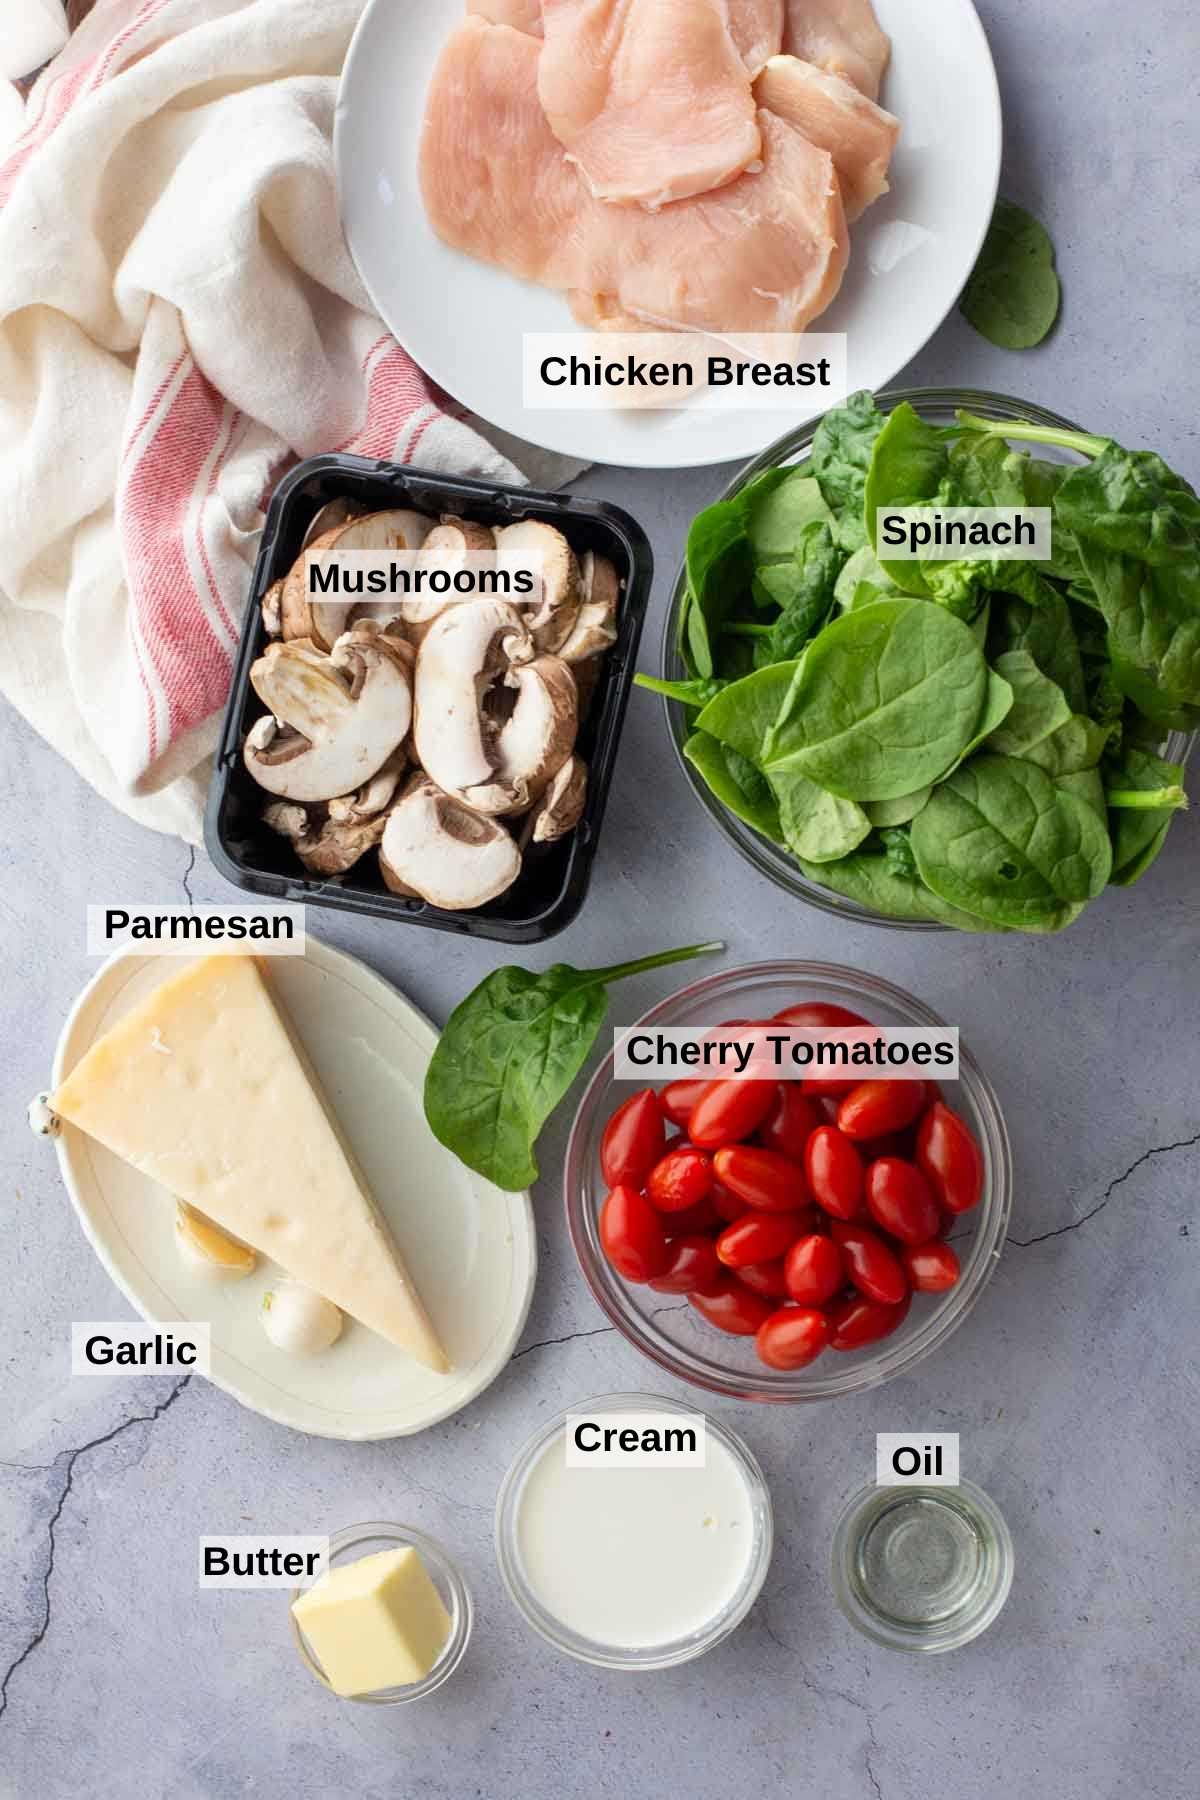 Ingredients to make Chicken Mushroom and Spinach skillet dinner.